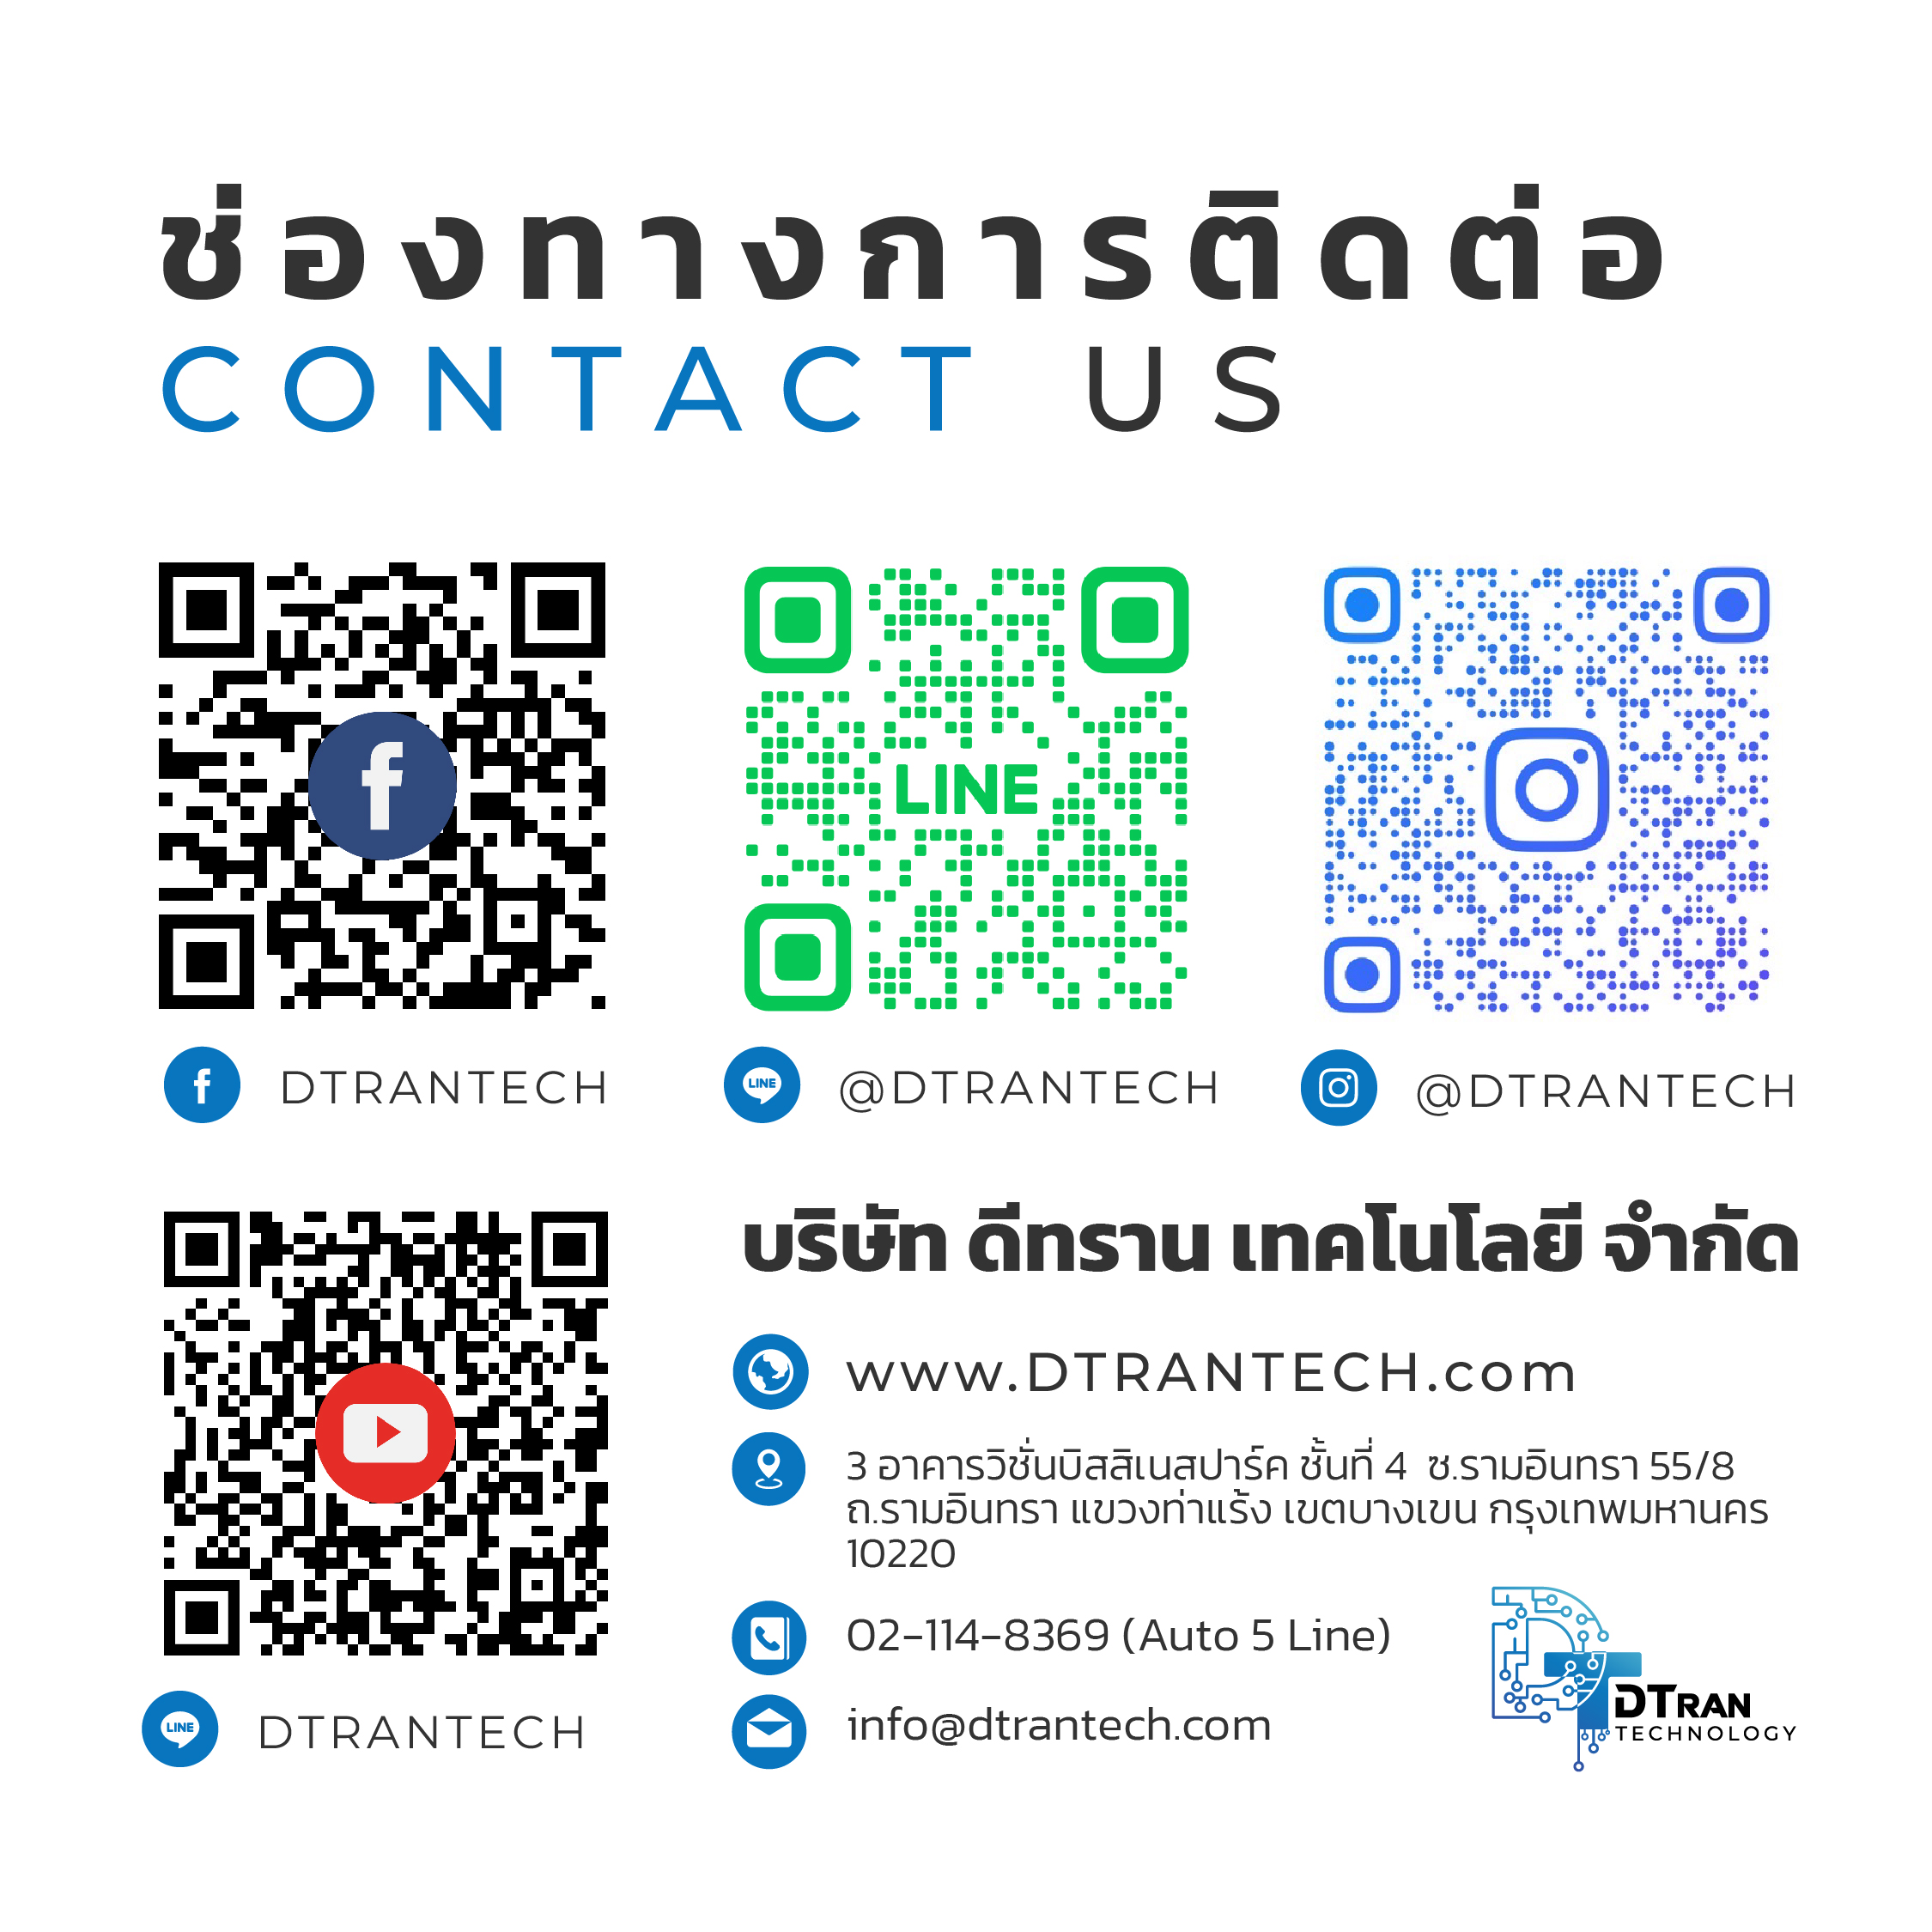 Contact us - DTRAN TECHNOLOGY CO., LTD.